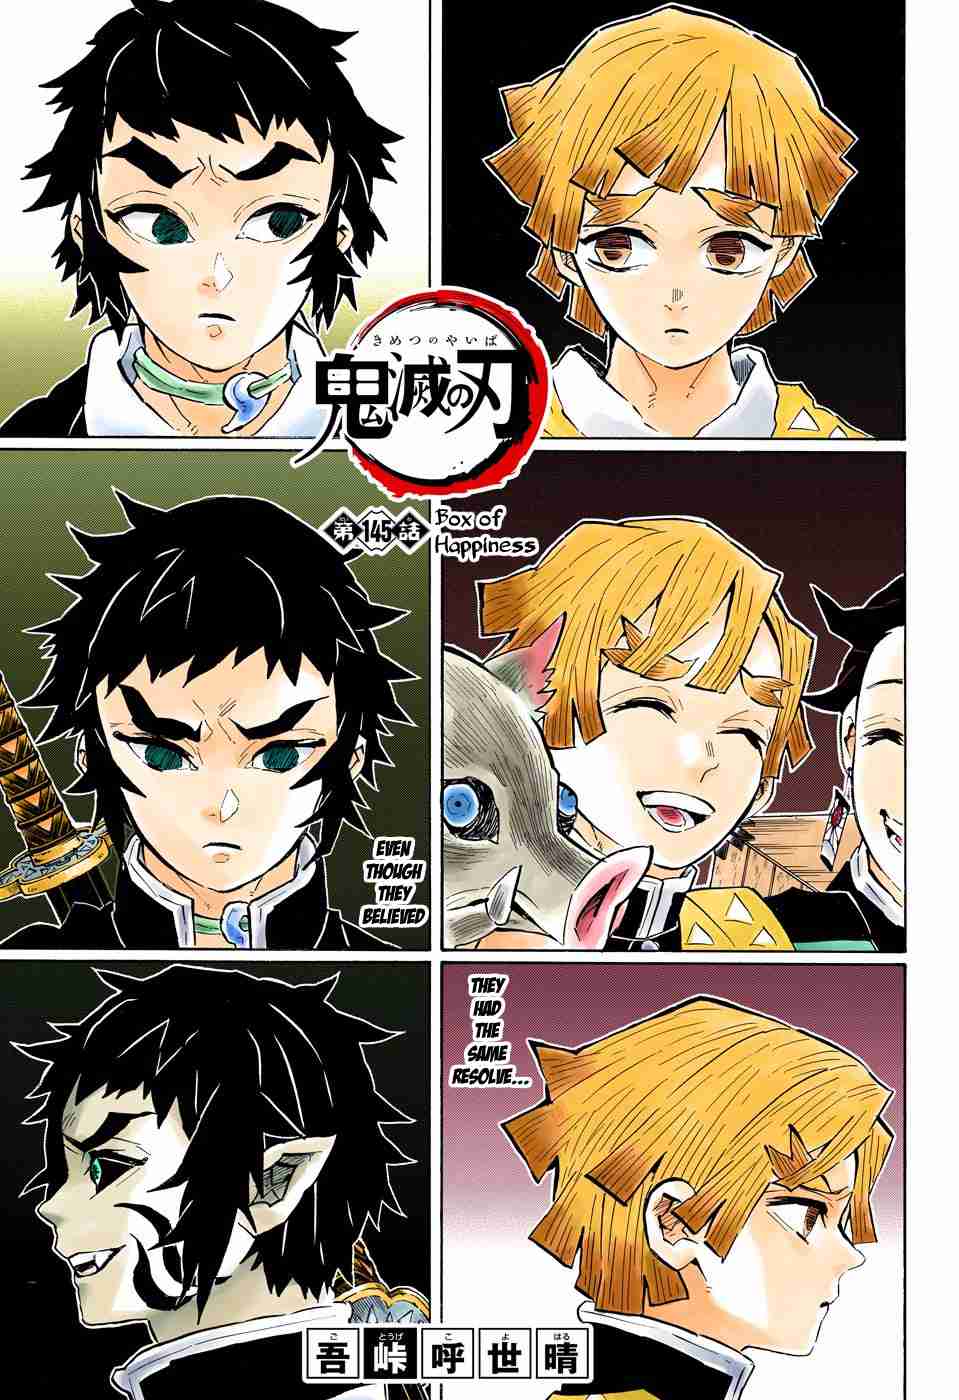 Kimetsu no Yaiba Digital Colored Comics Ch. 145 Box of Happiness